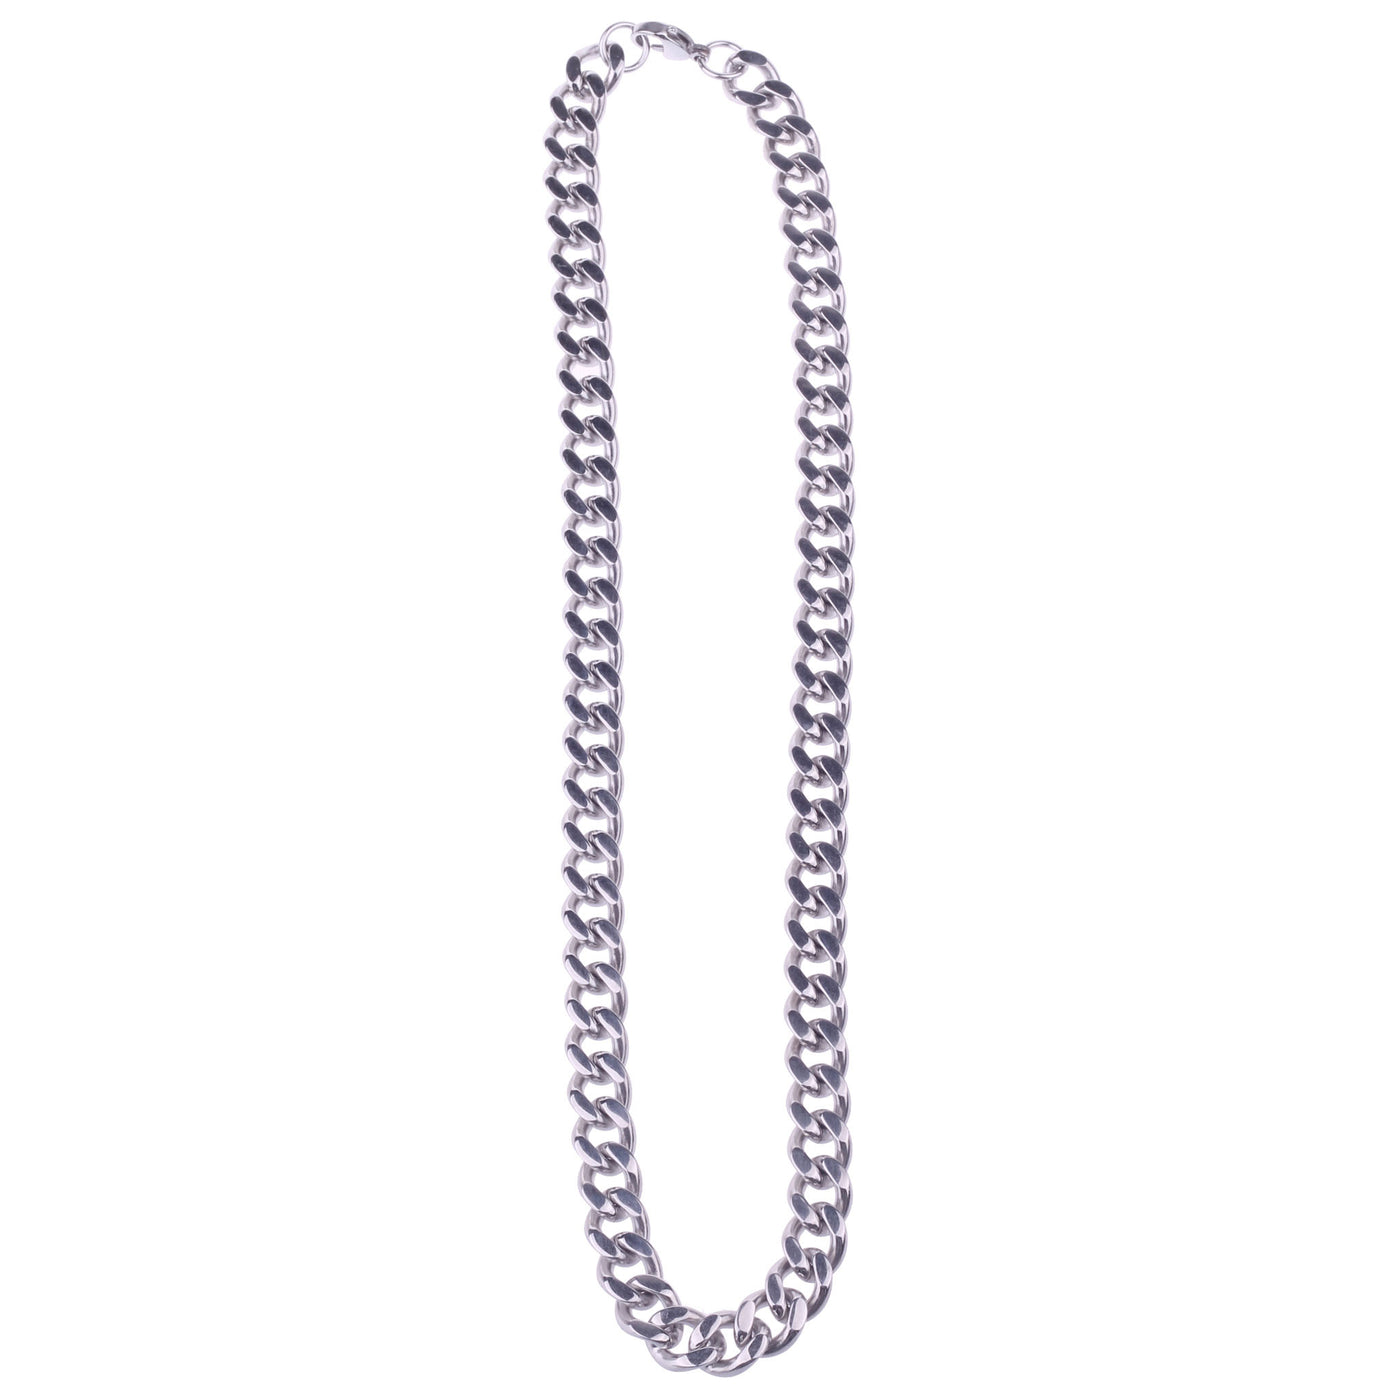 Steel chain 50cm